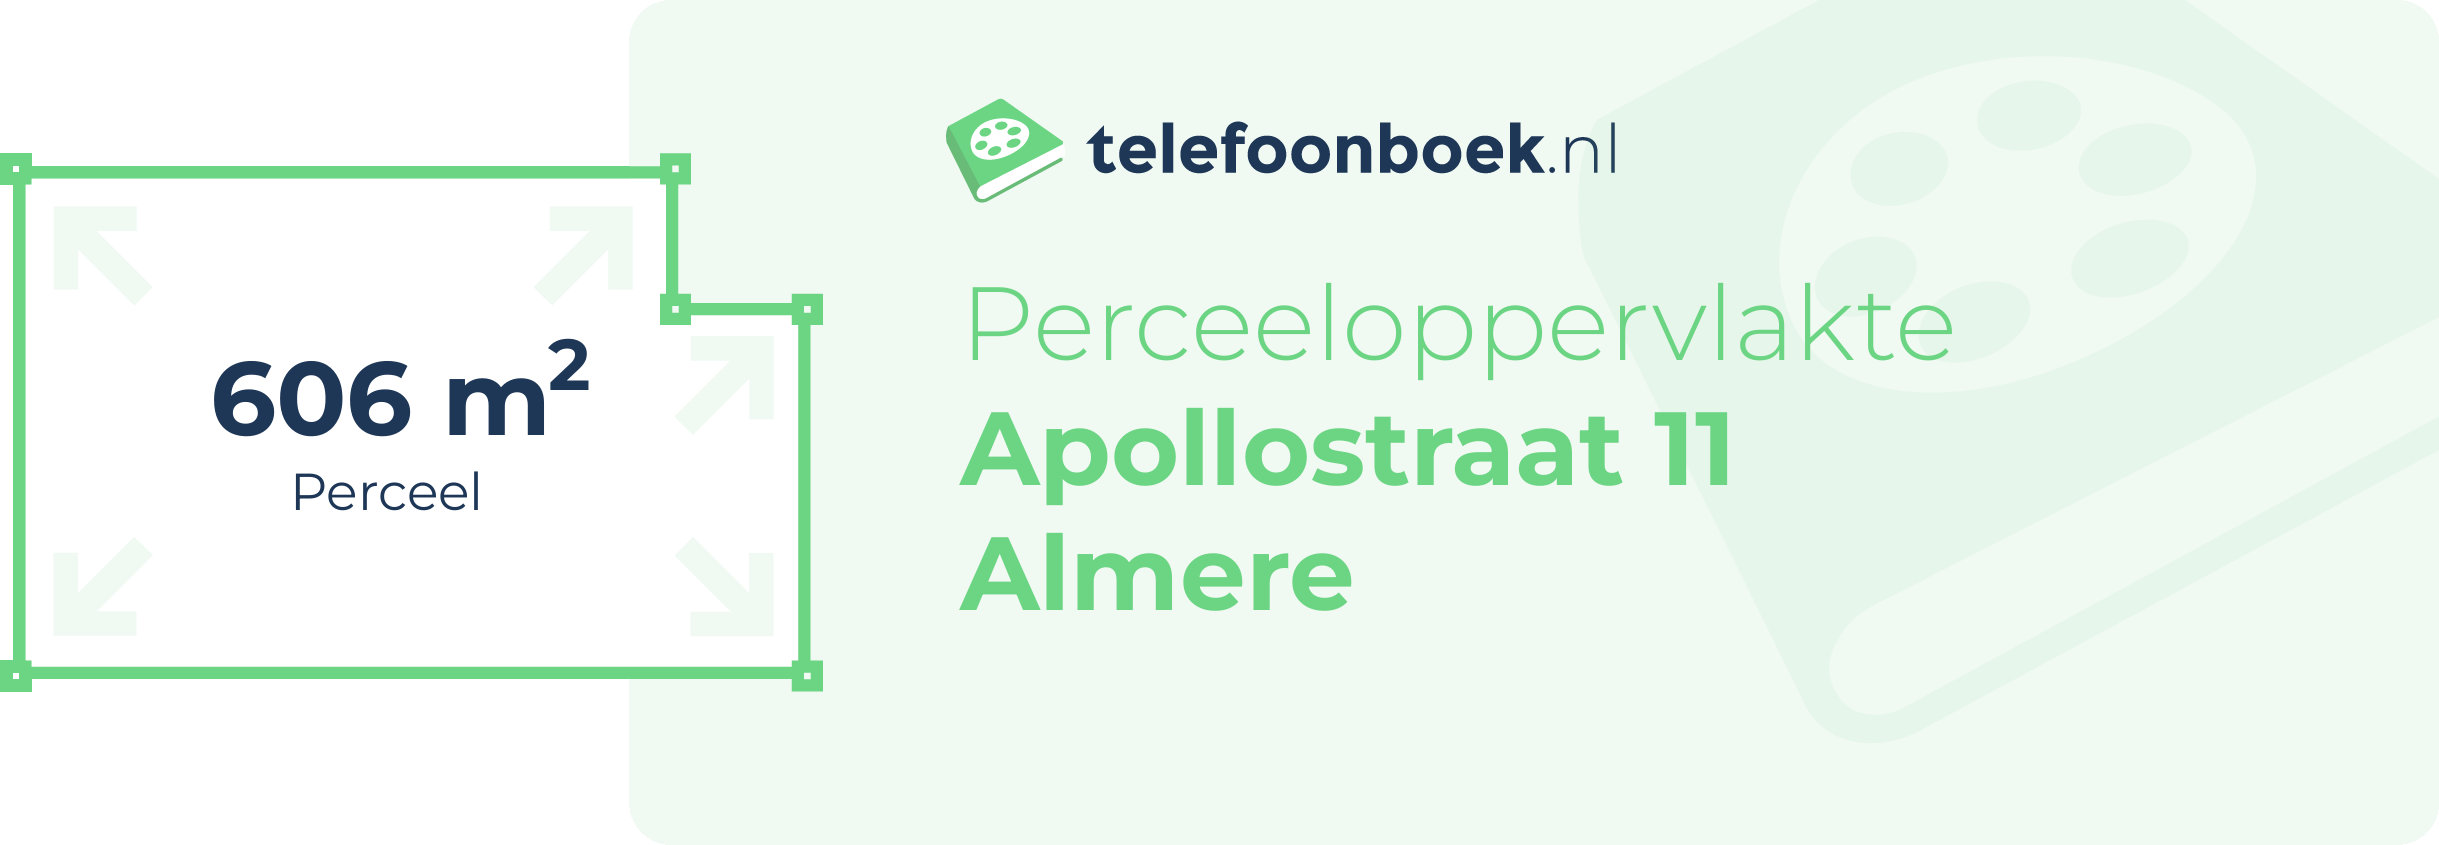 Perceeloppervlakte Apollostraat 11 Almere